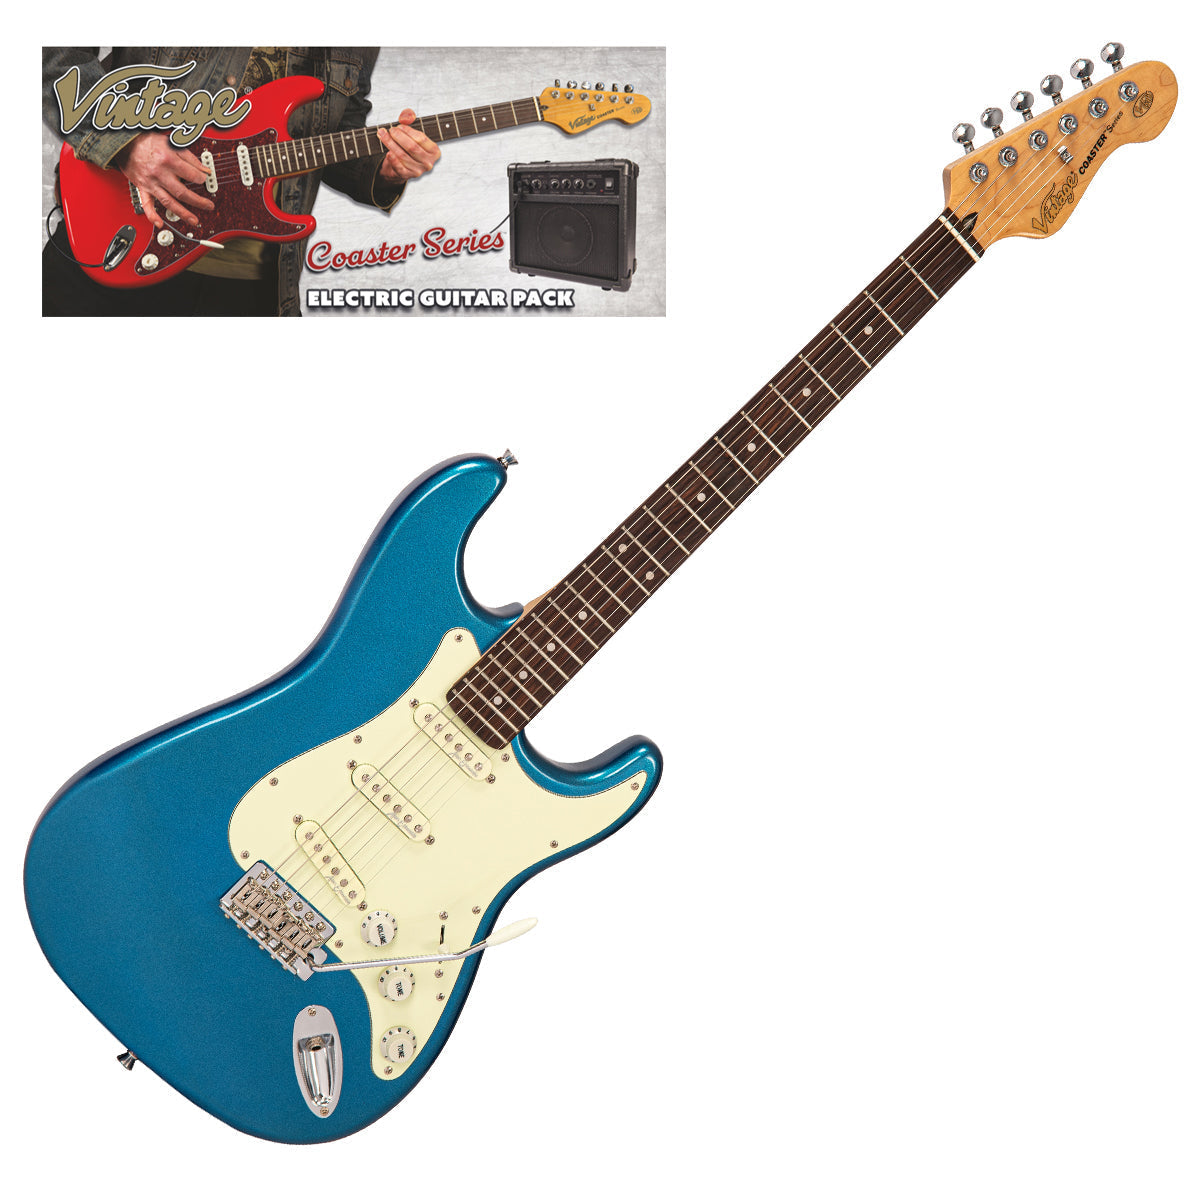 Vintage V60 Coaster Series Electric Guitar Pack ~ Candy Apple Blue, Electric Guitar for sale at Richards Guitars.